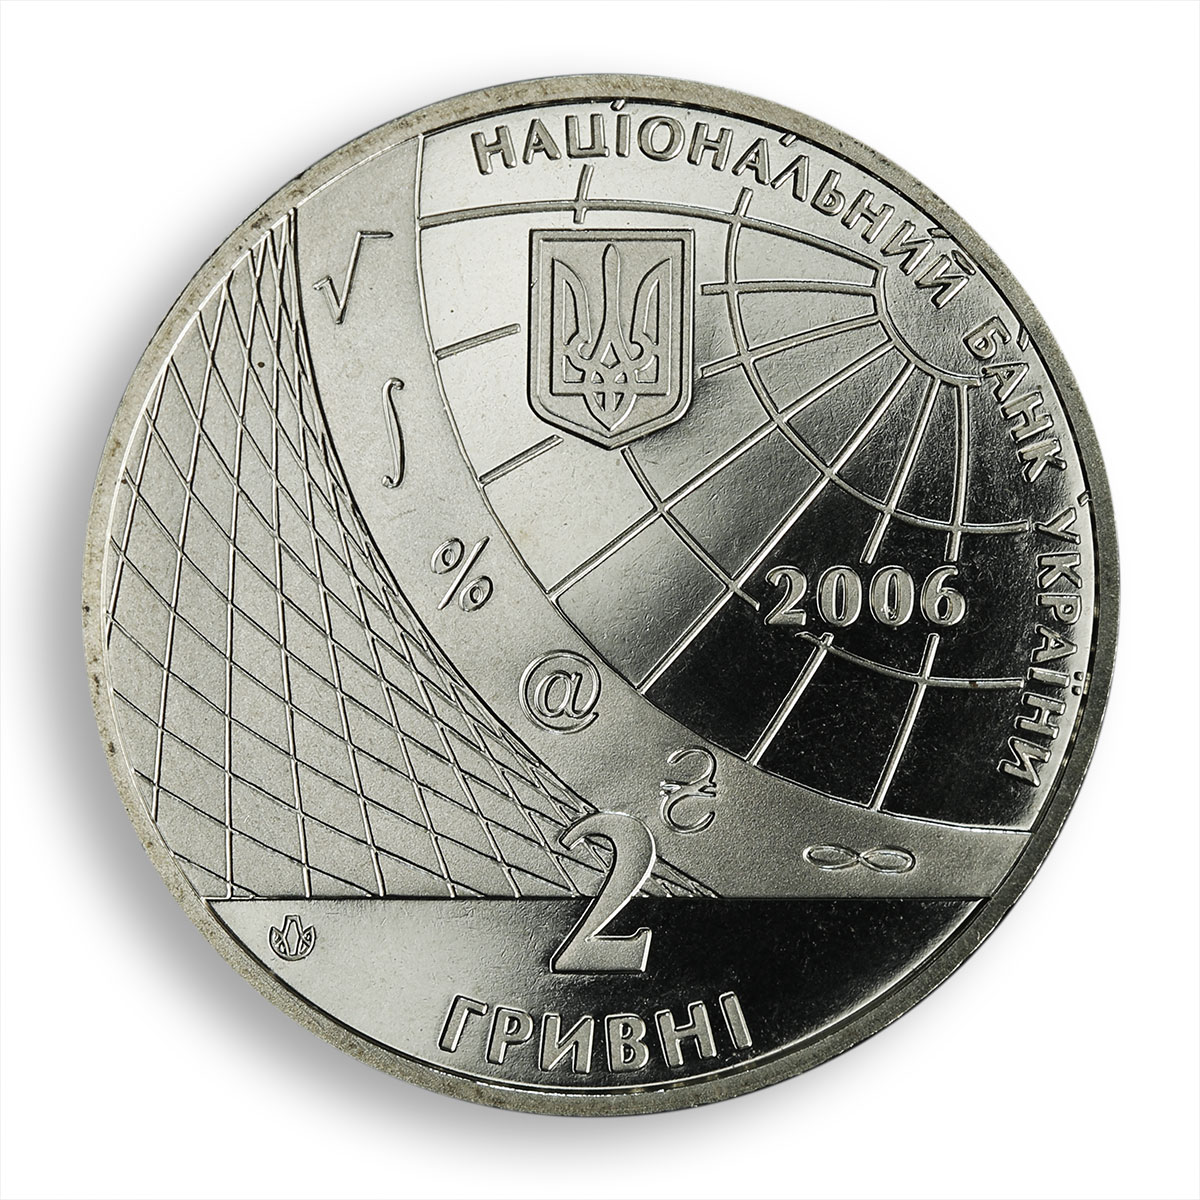 Ukraine 2 hryvnia 100 years Kyiv National Economic University nickel coin 2006